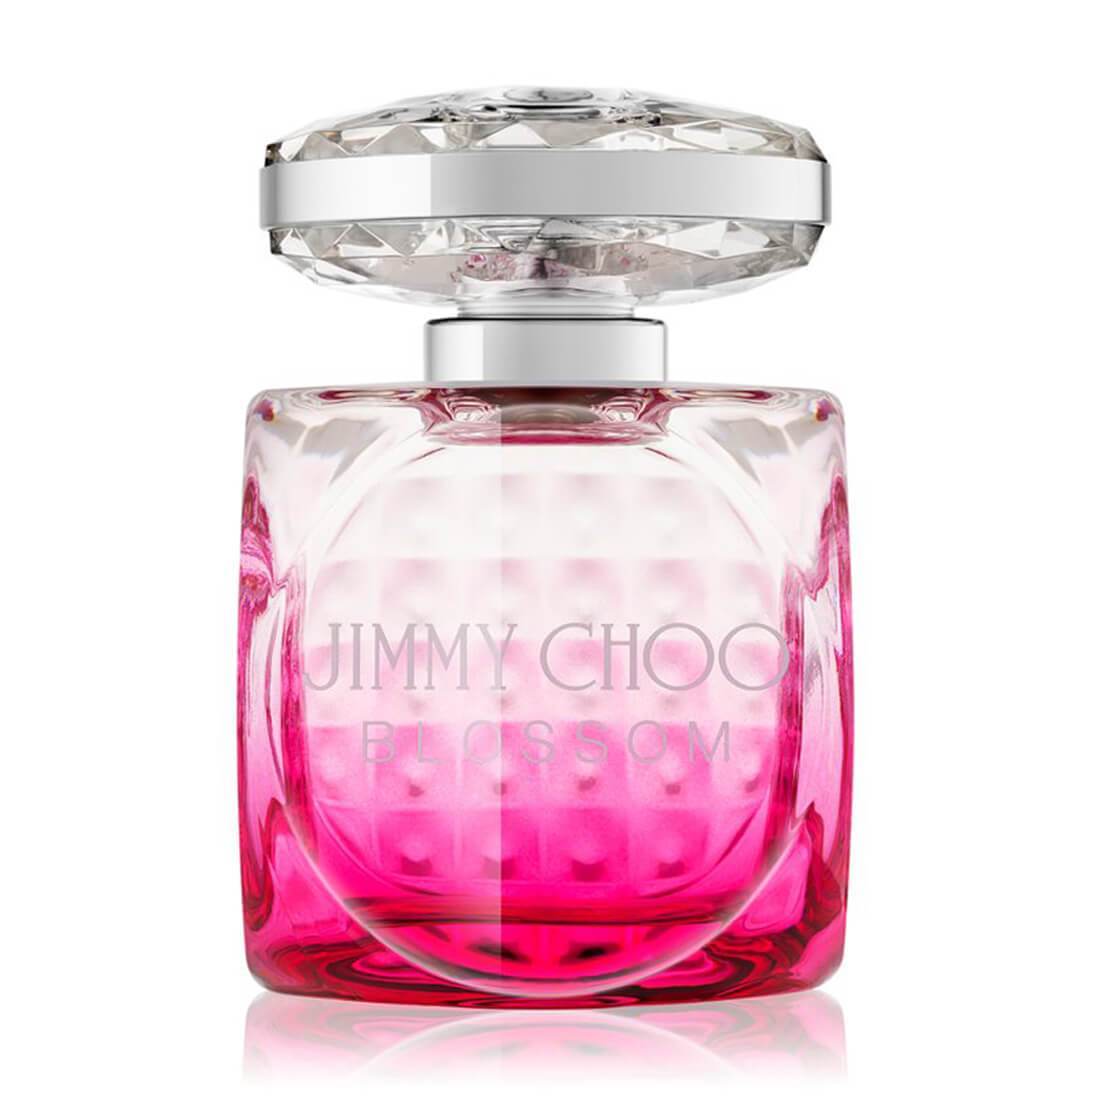 Jimmy Choo 3 Pc. Eau de Parfum Gift Set JImmy Choo Fever Purse Spray | eBay